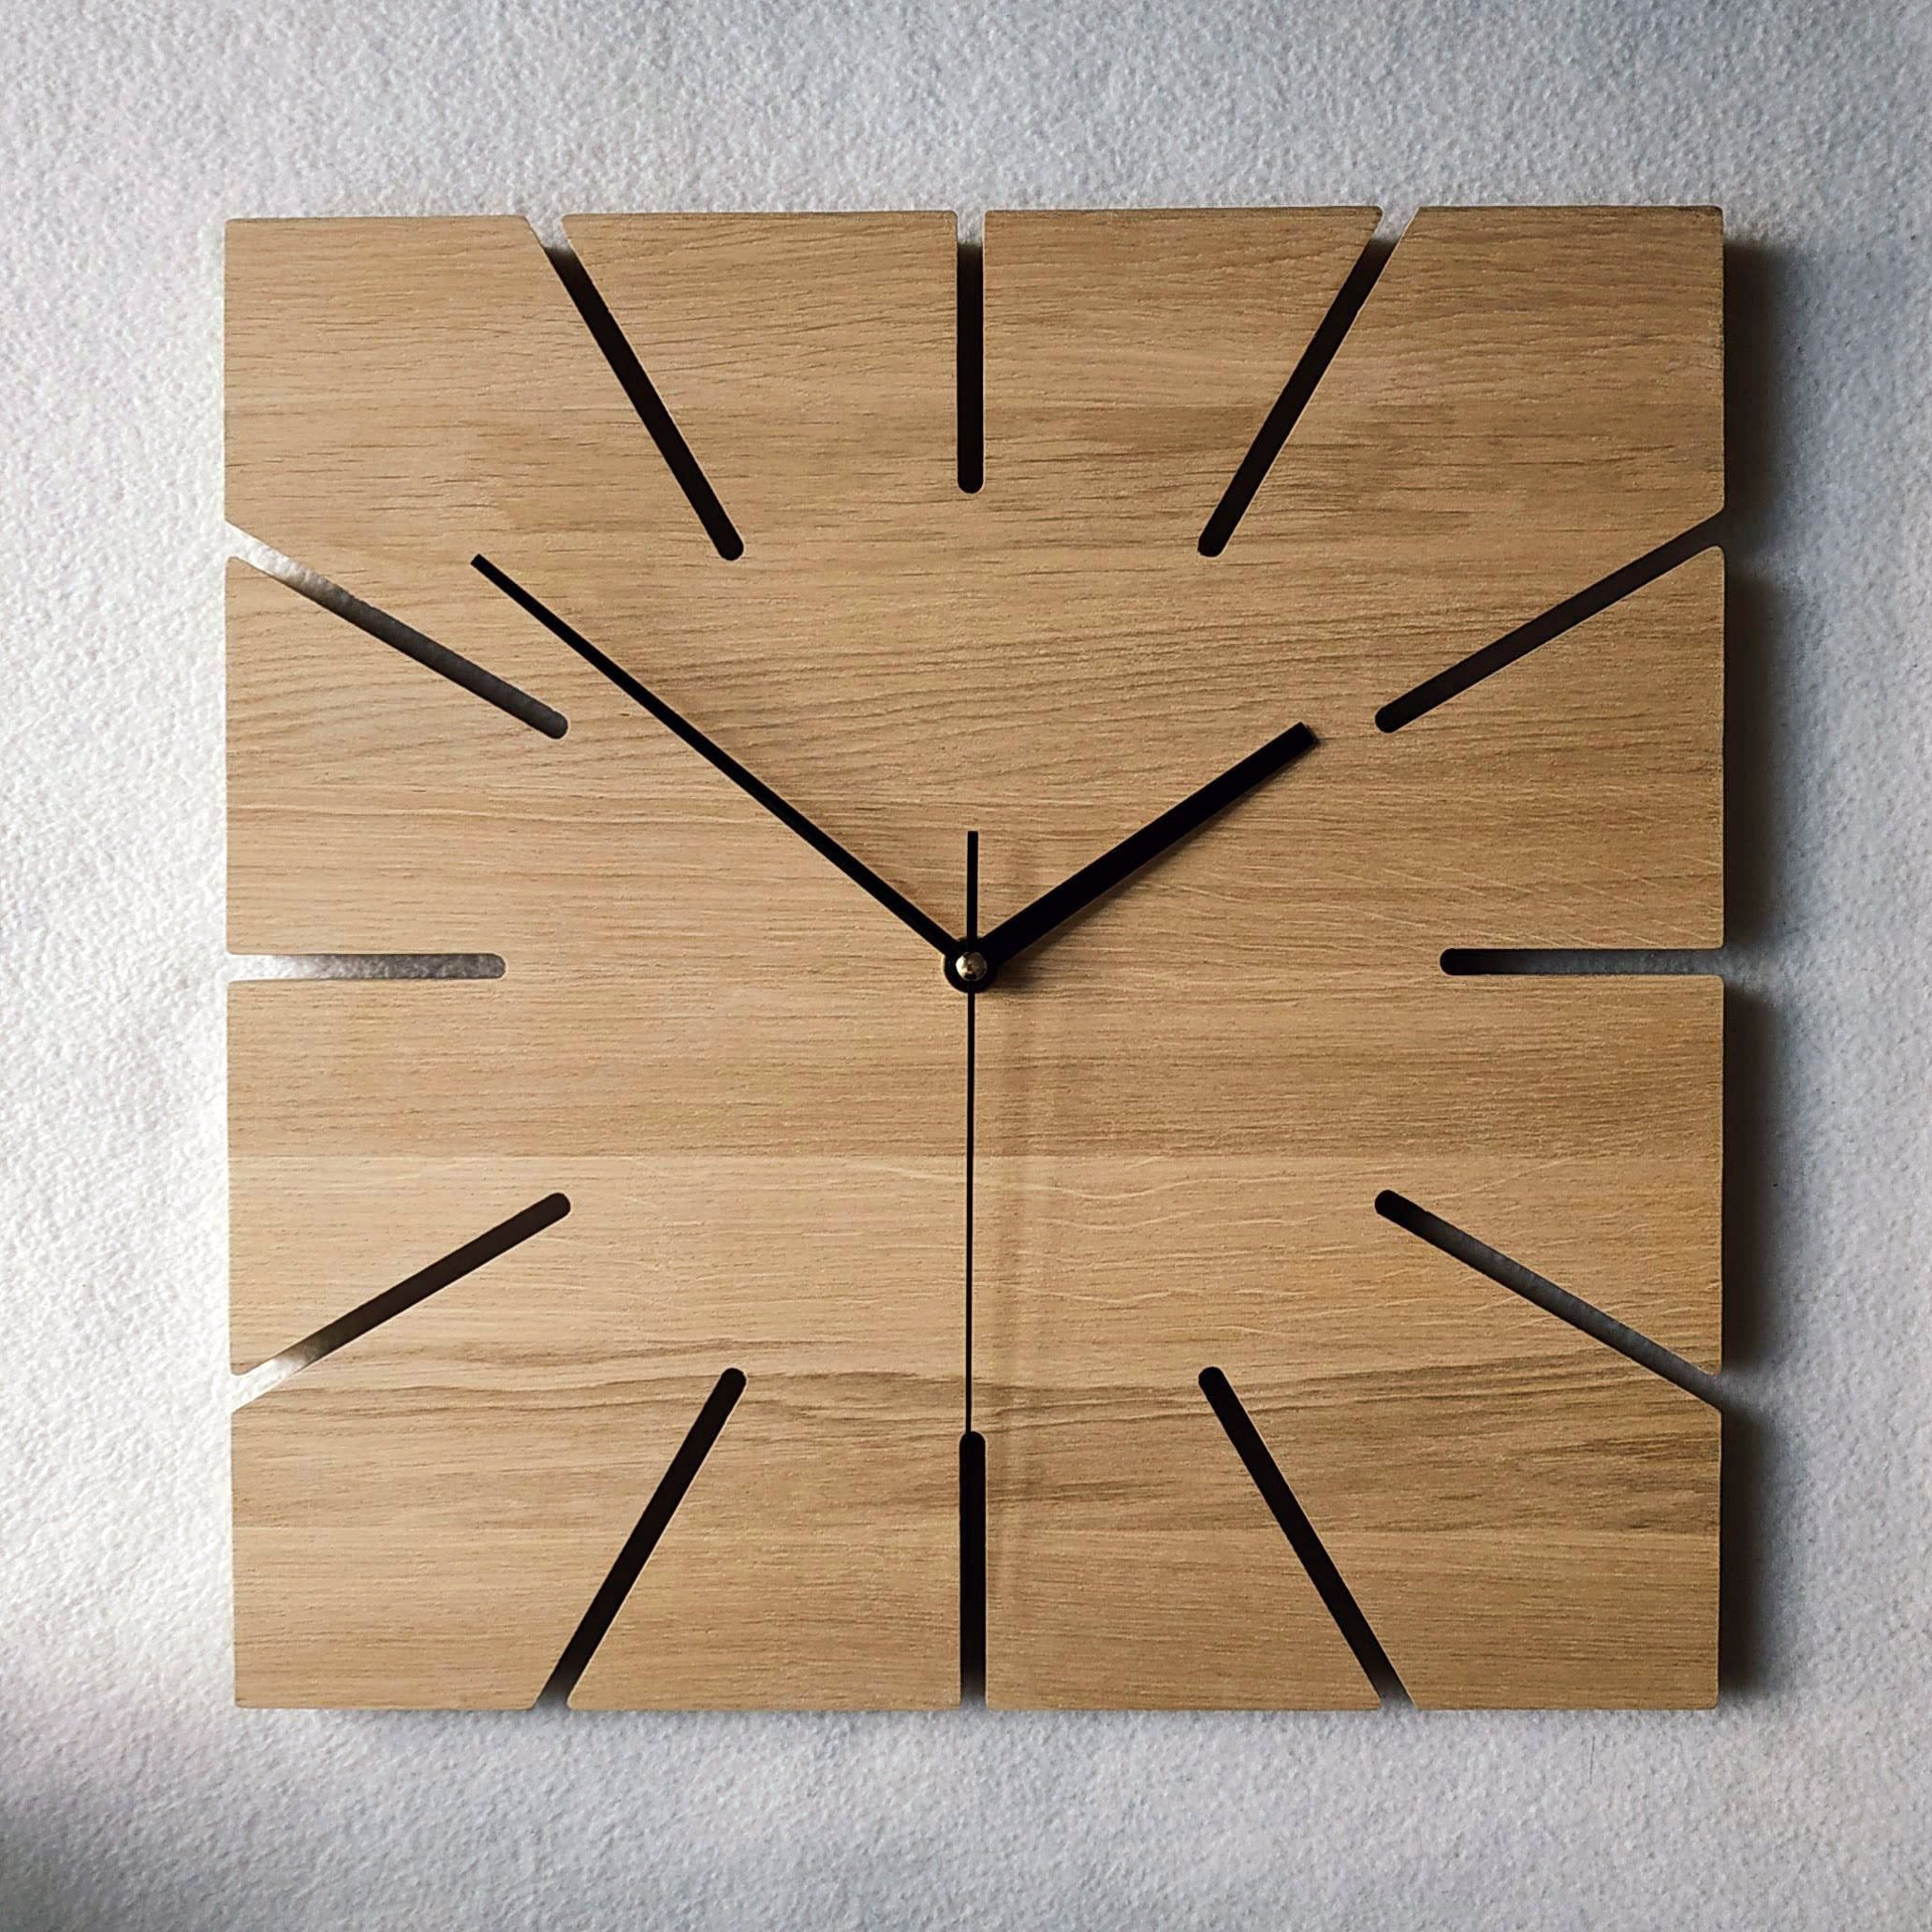 Designer Clocks